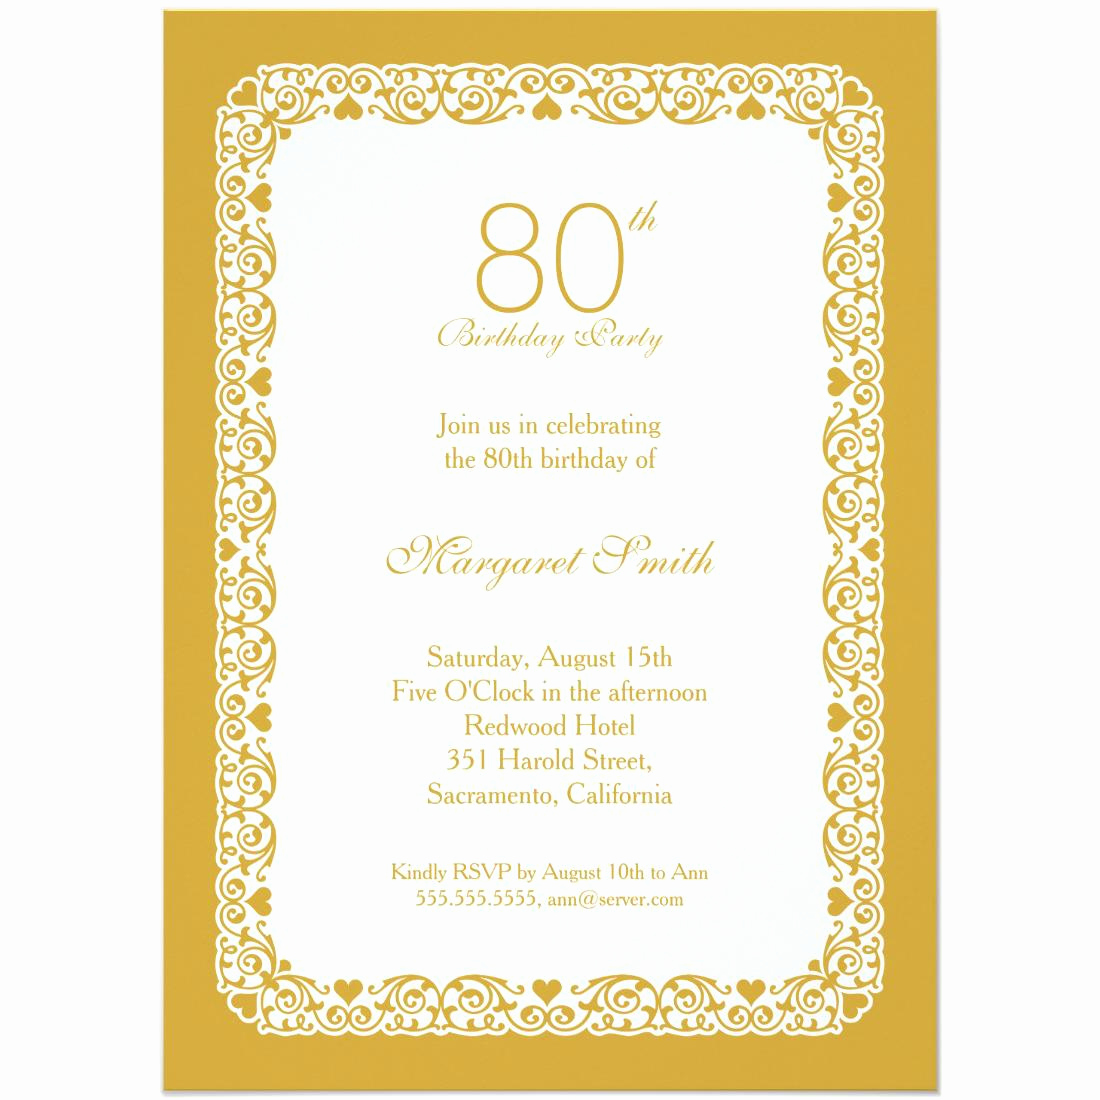 80th Birthday Invitation Wording New 15 Sample 80th Birthday Invitations Templates Ideas